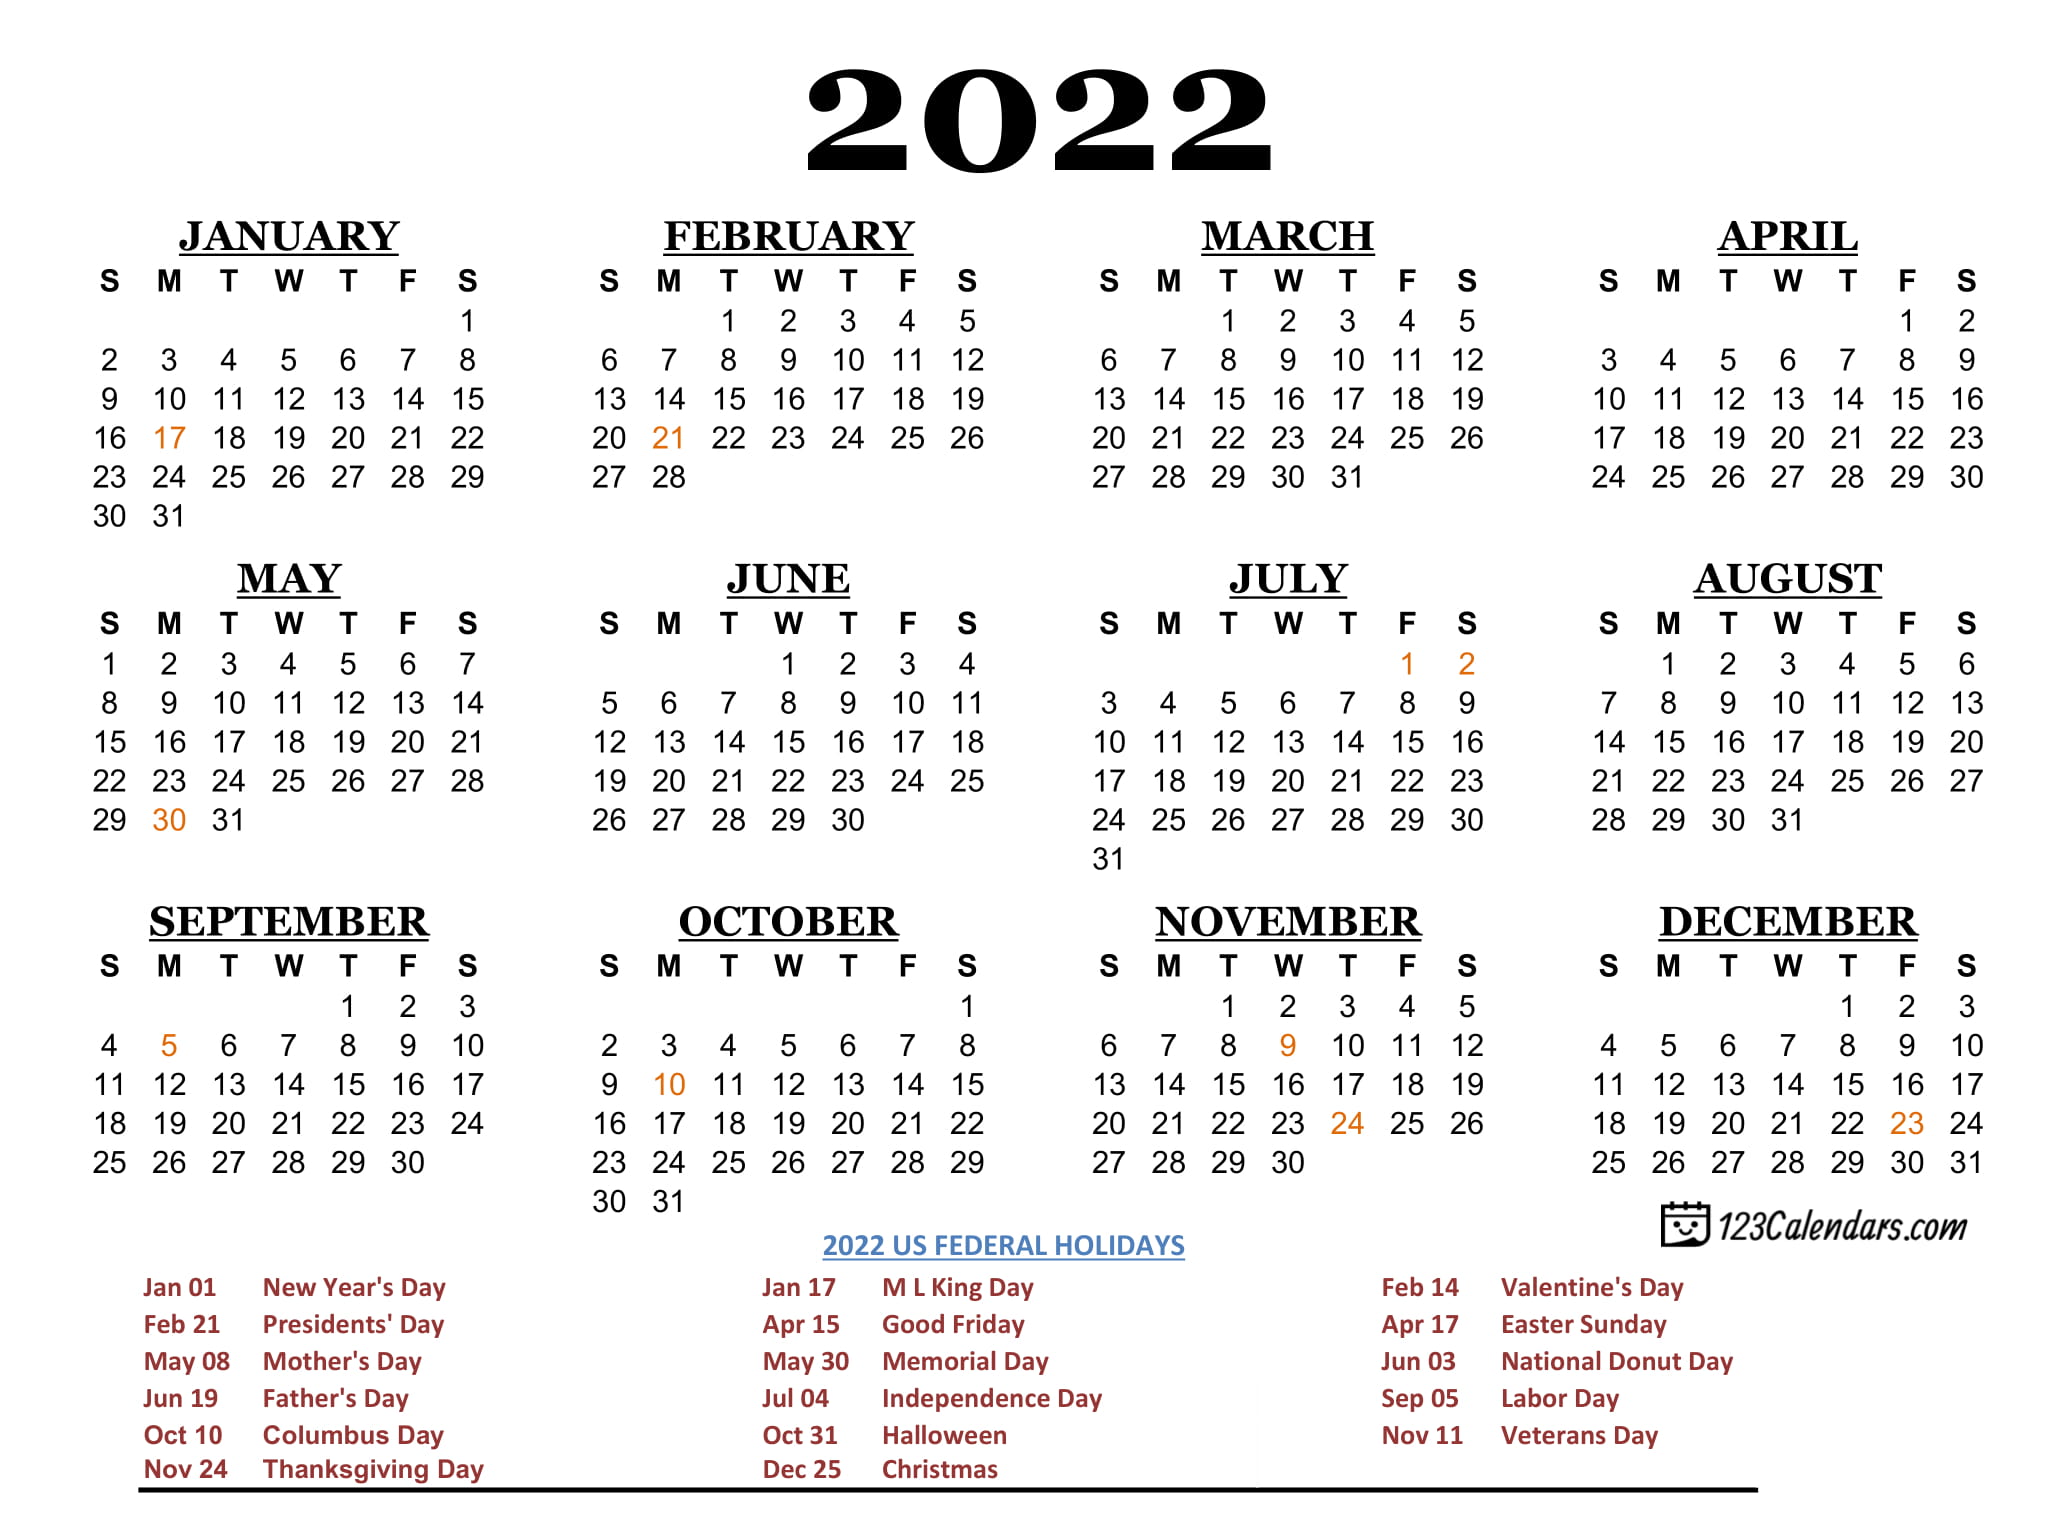 Presidents Day 2022 Calendar Year 2022 Calendar Templates | 123Calendars.com